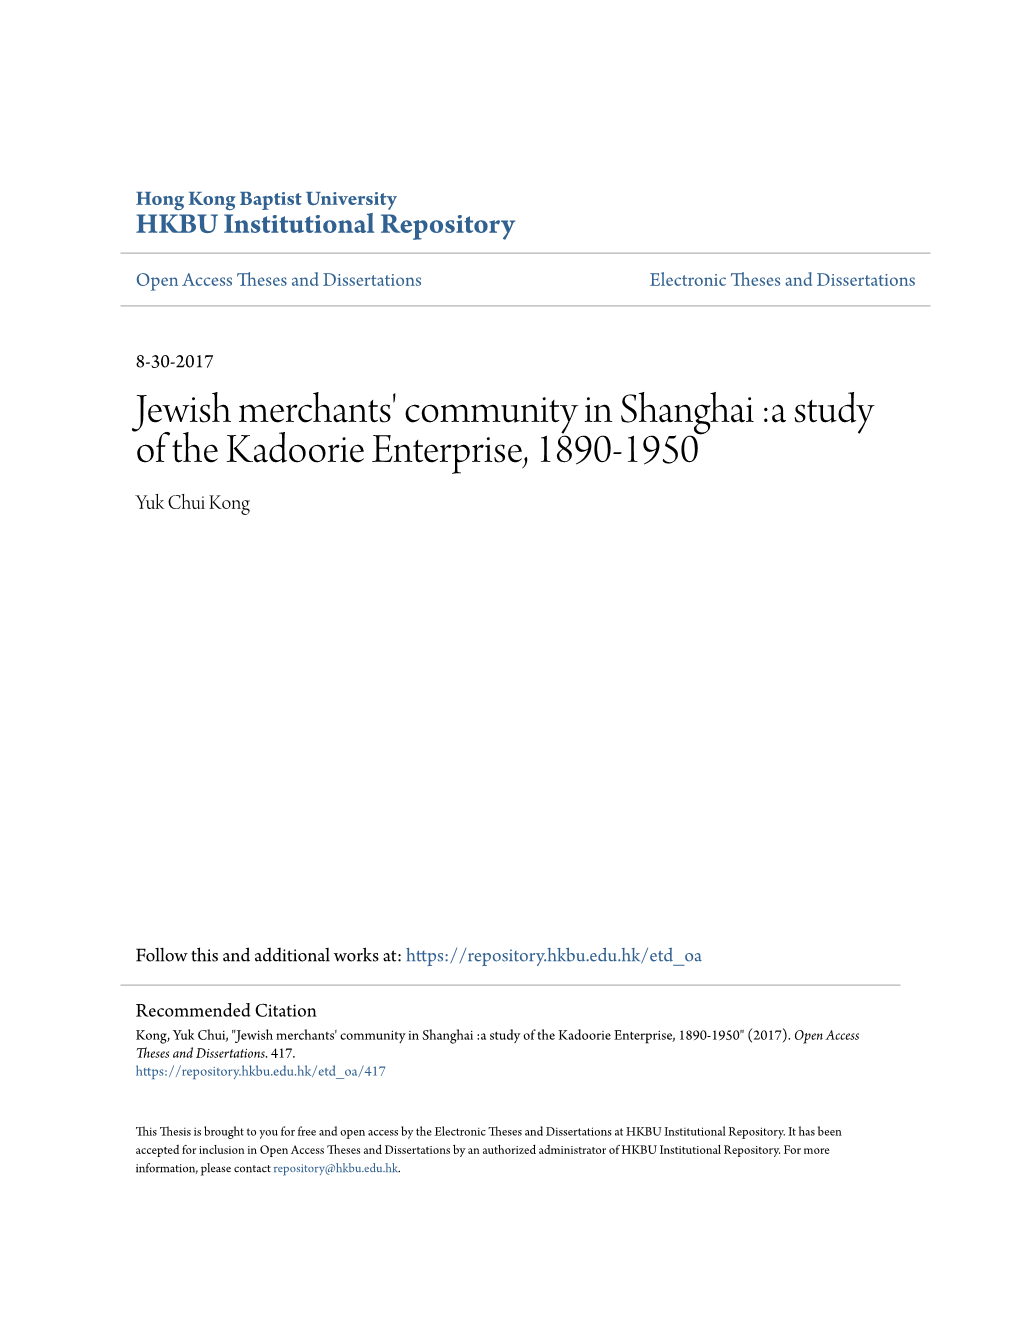 Jewish Merchants' Community in Shanghai :A Study of the Kadoorie Enterprise, 1890-1950 Yuk Chui Kong